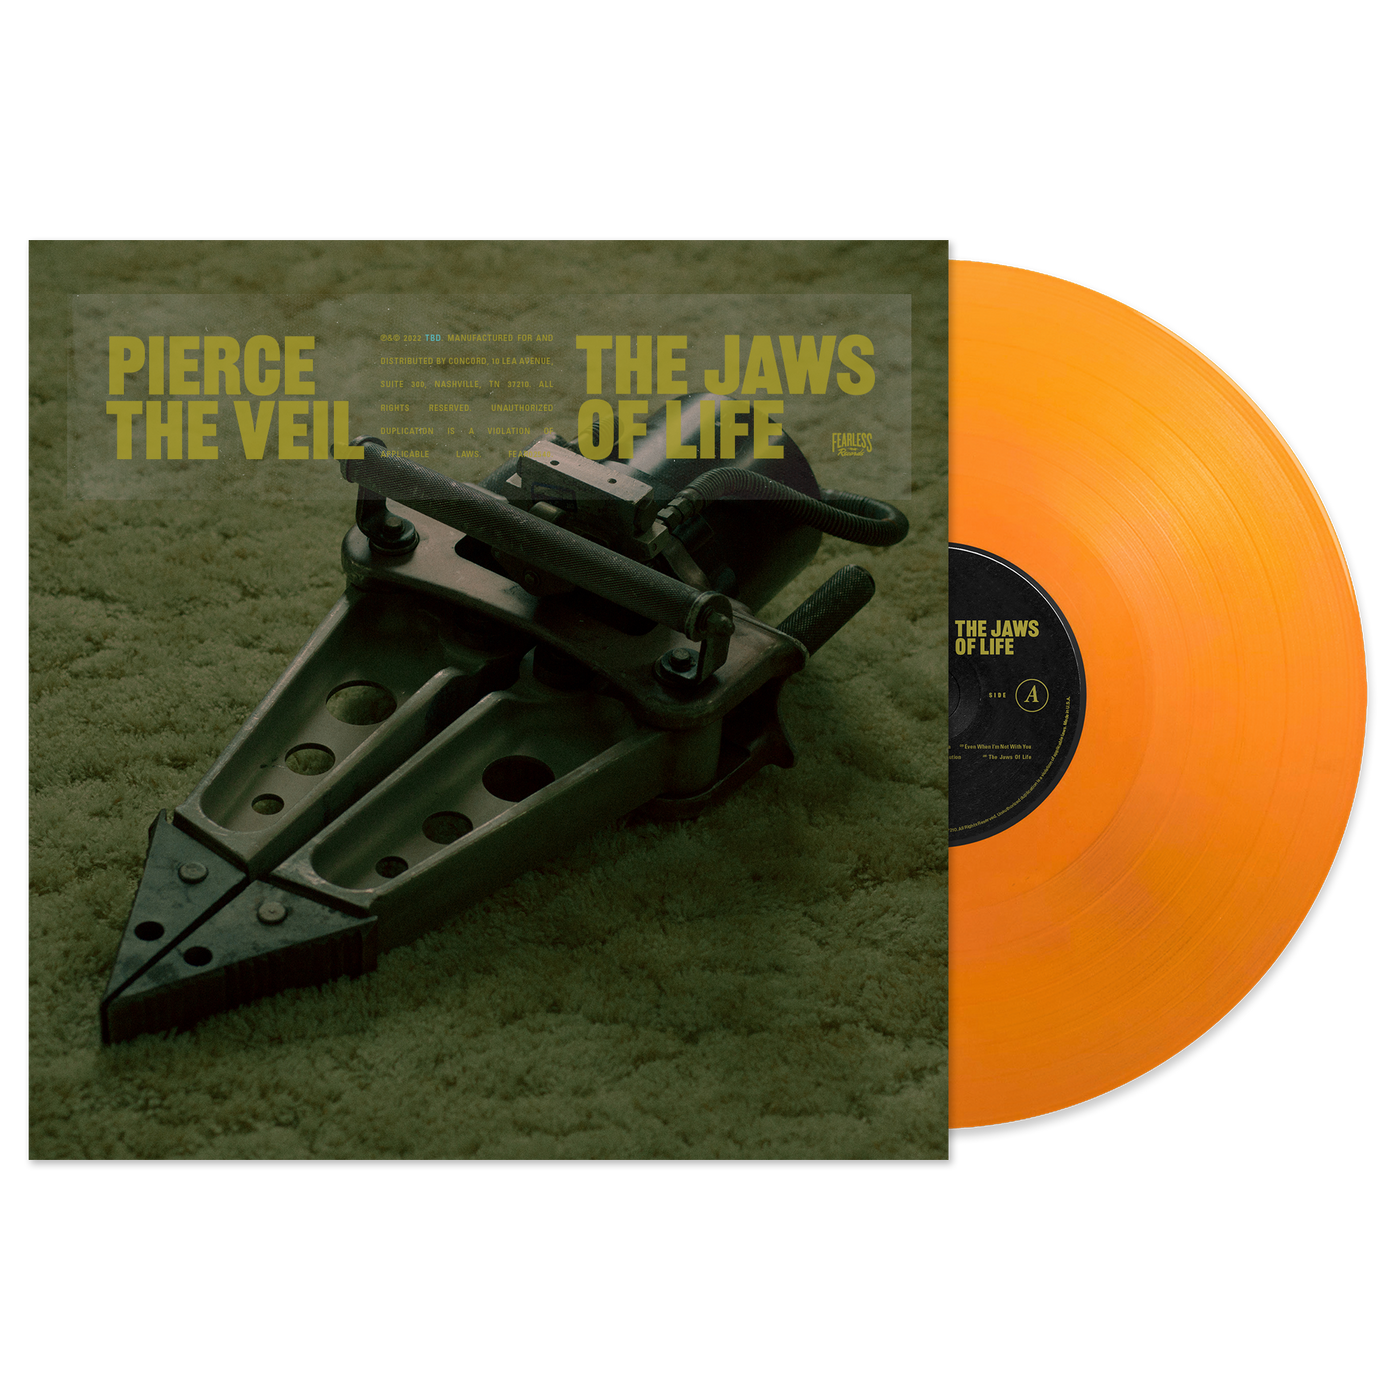 blod vinge Ubevæbnet Pierce the Veil – "The Jaws Of Life" Tangerine Vinyl – Fearless Records